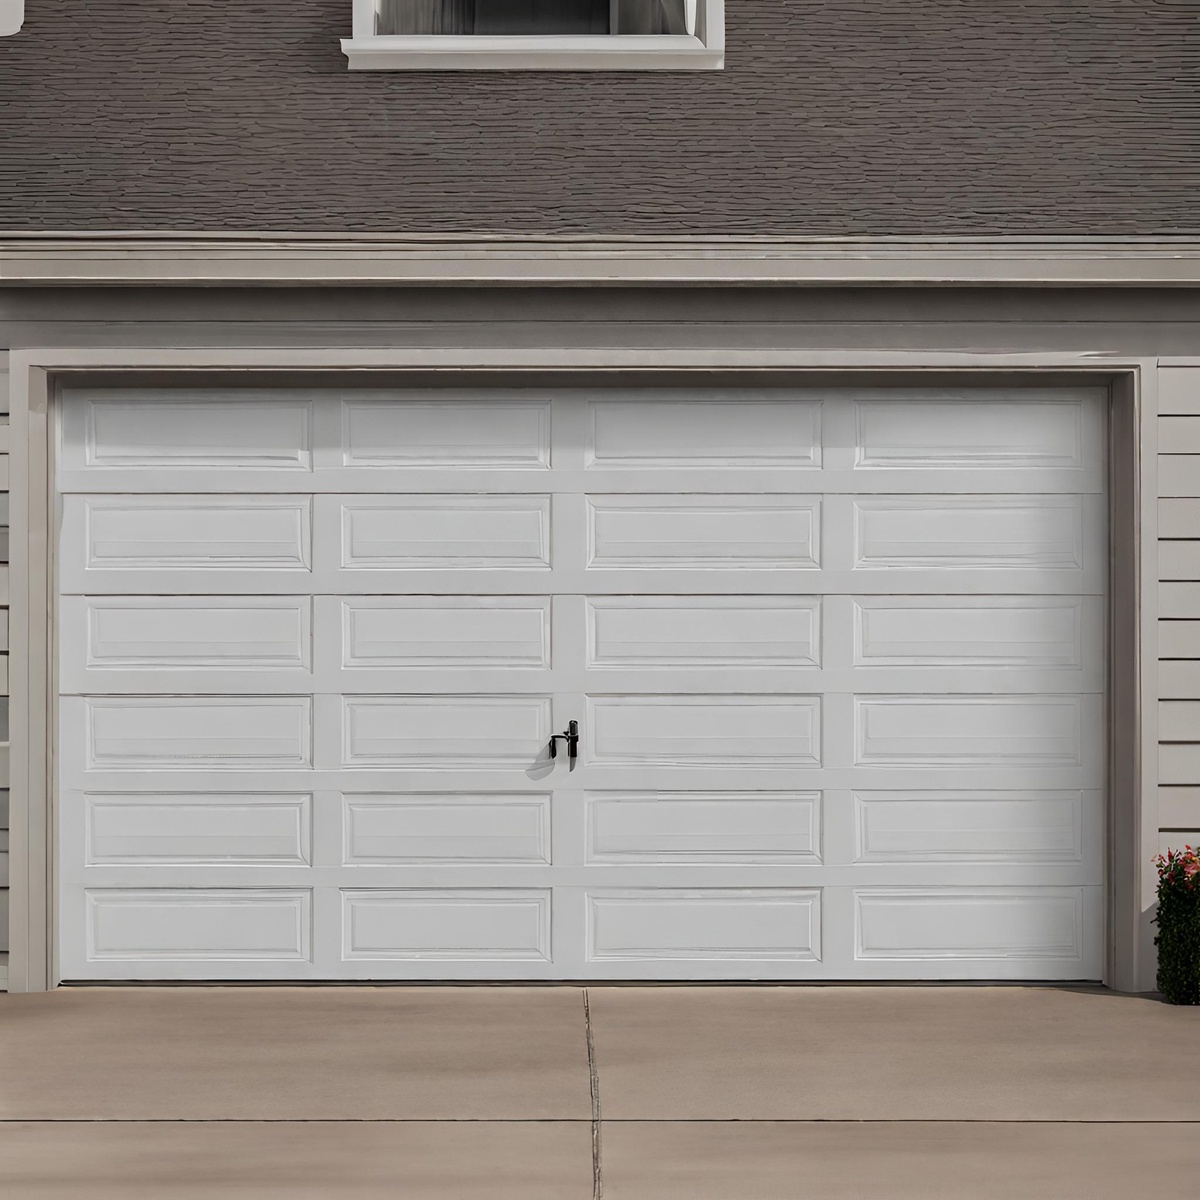 Upgrade Your Garage with the Latest Garage Door Supply